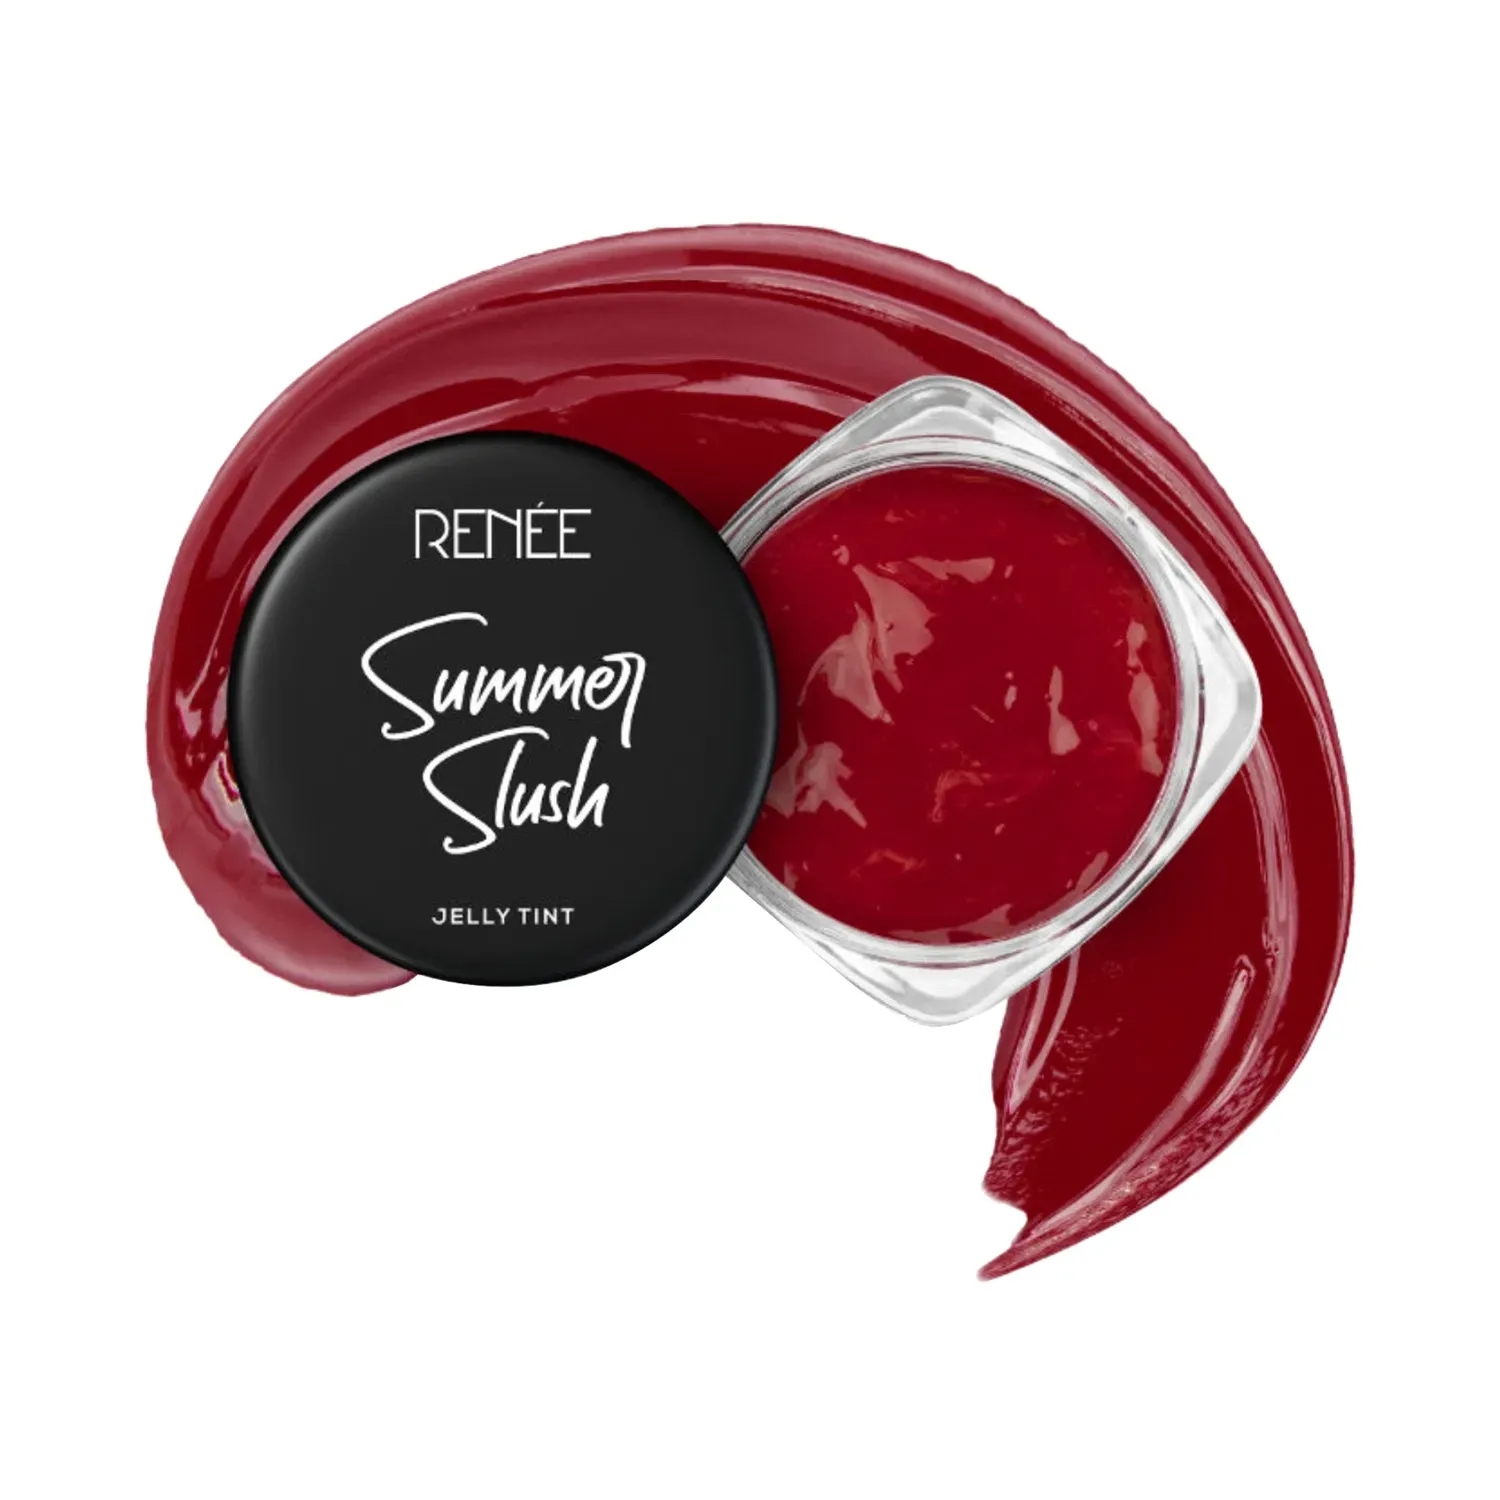 RENEE Summer Slush Jelly Tint - Juicy Strawberry (13g)